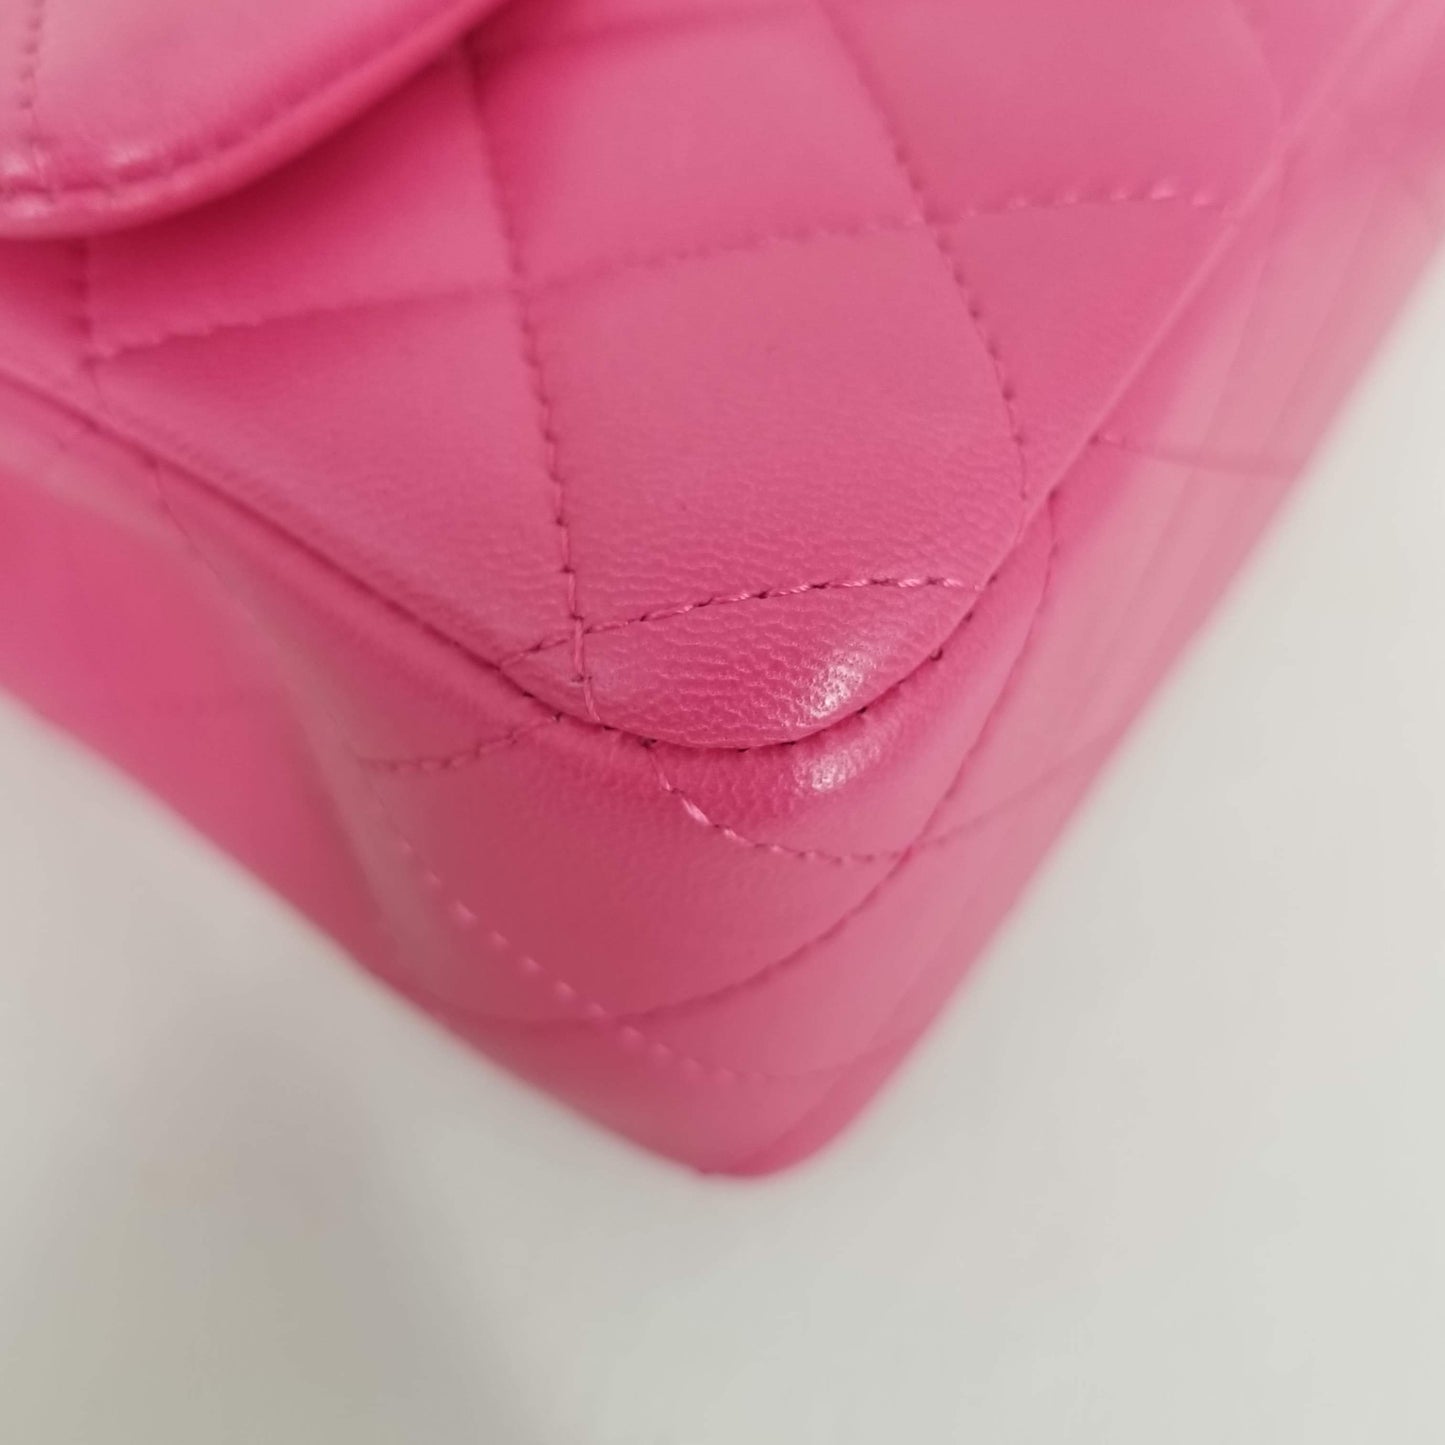 Authentic Chanel Fuchsia Pink Mini Flap Bag